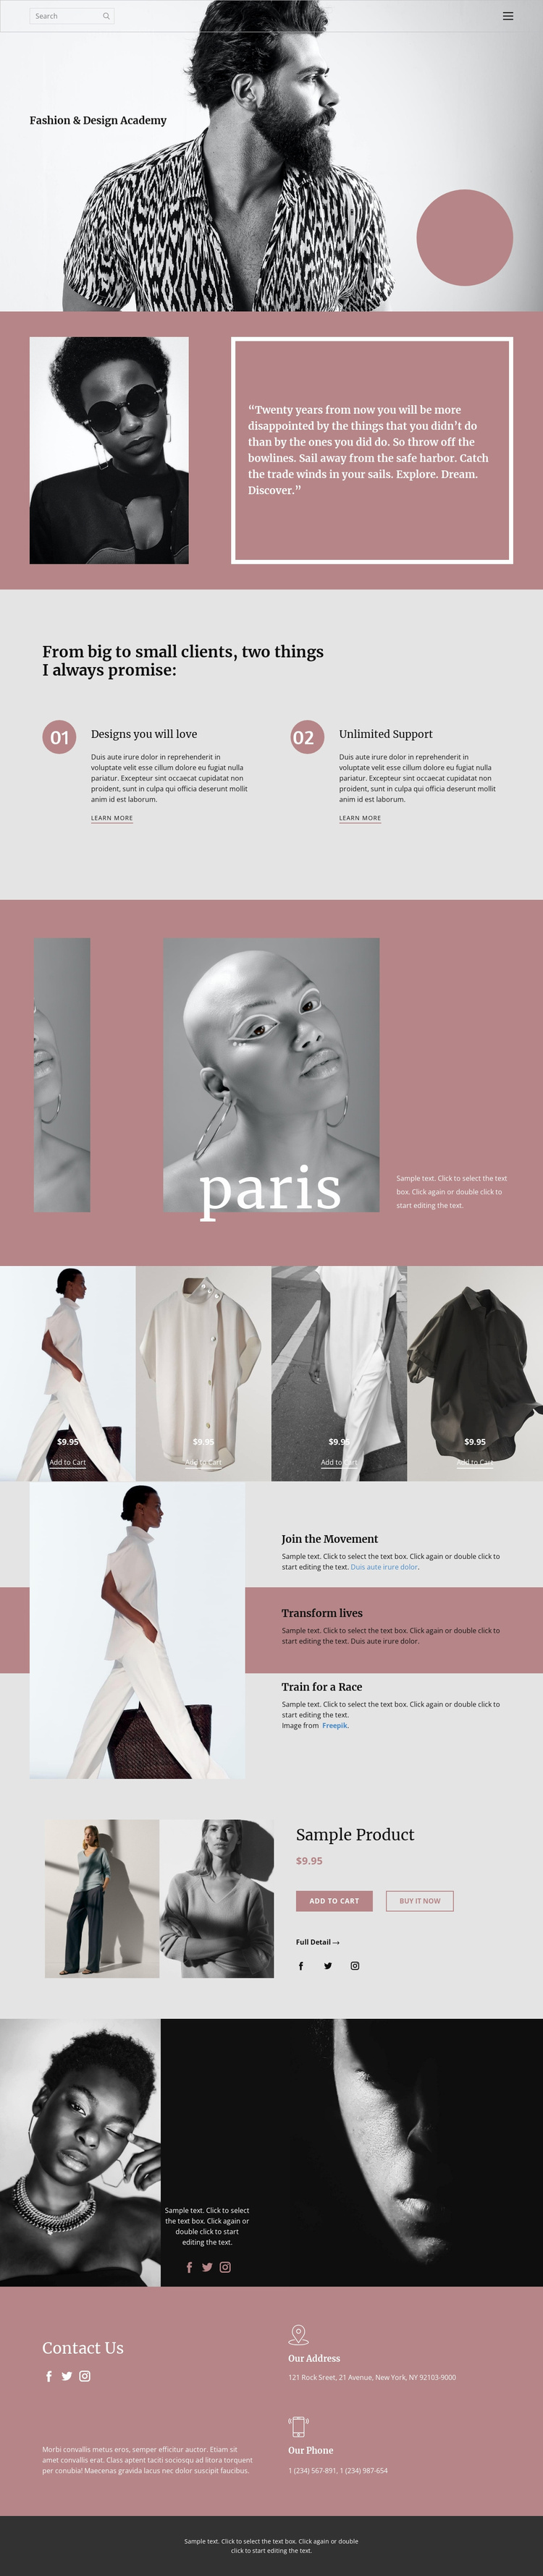 Fashion studio Website Template